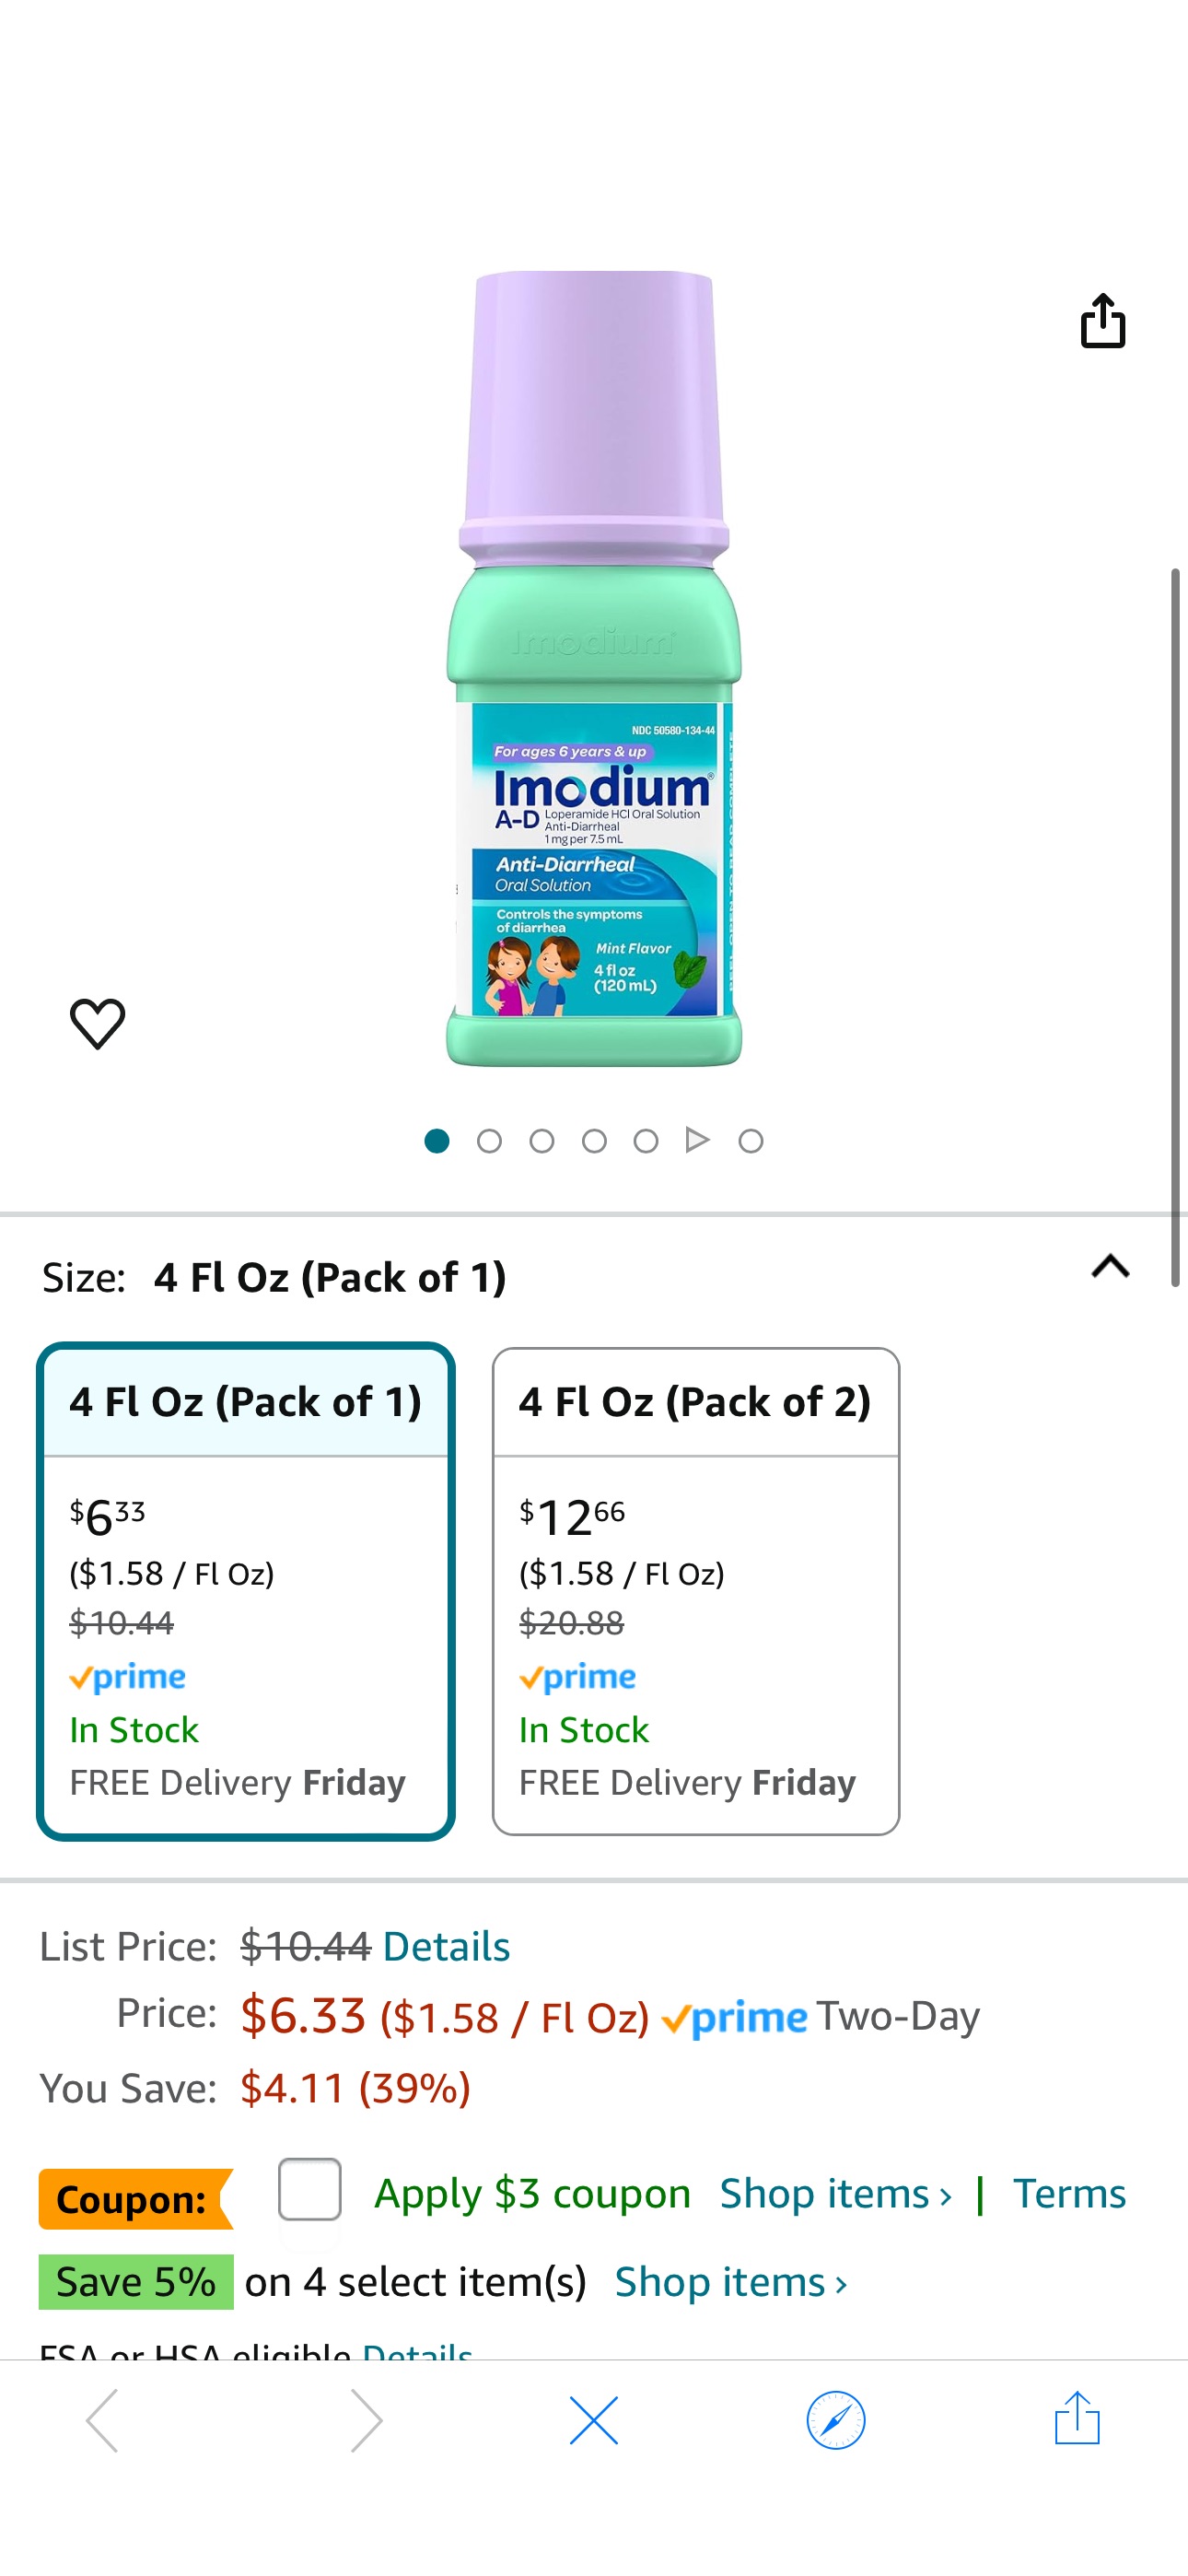 Amazon.com: Imodium A-D Children's Liquid Anti-Diarrheal Medicine with Loperamide Hydrochloride for Diarrhea Symptom Treatment & Control coupon